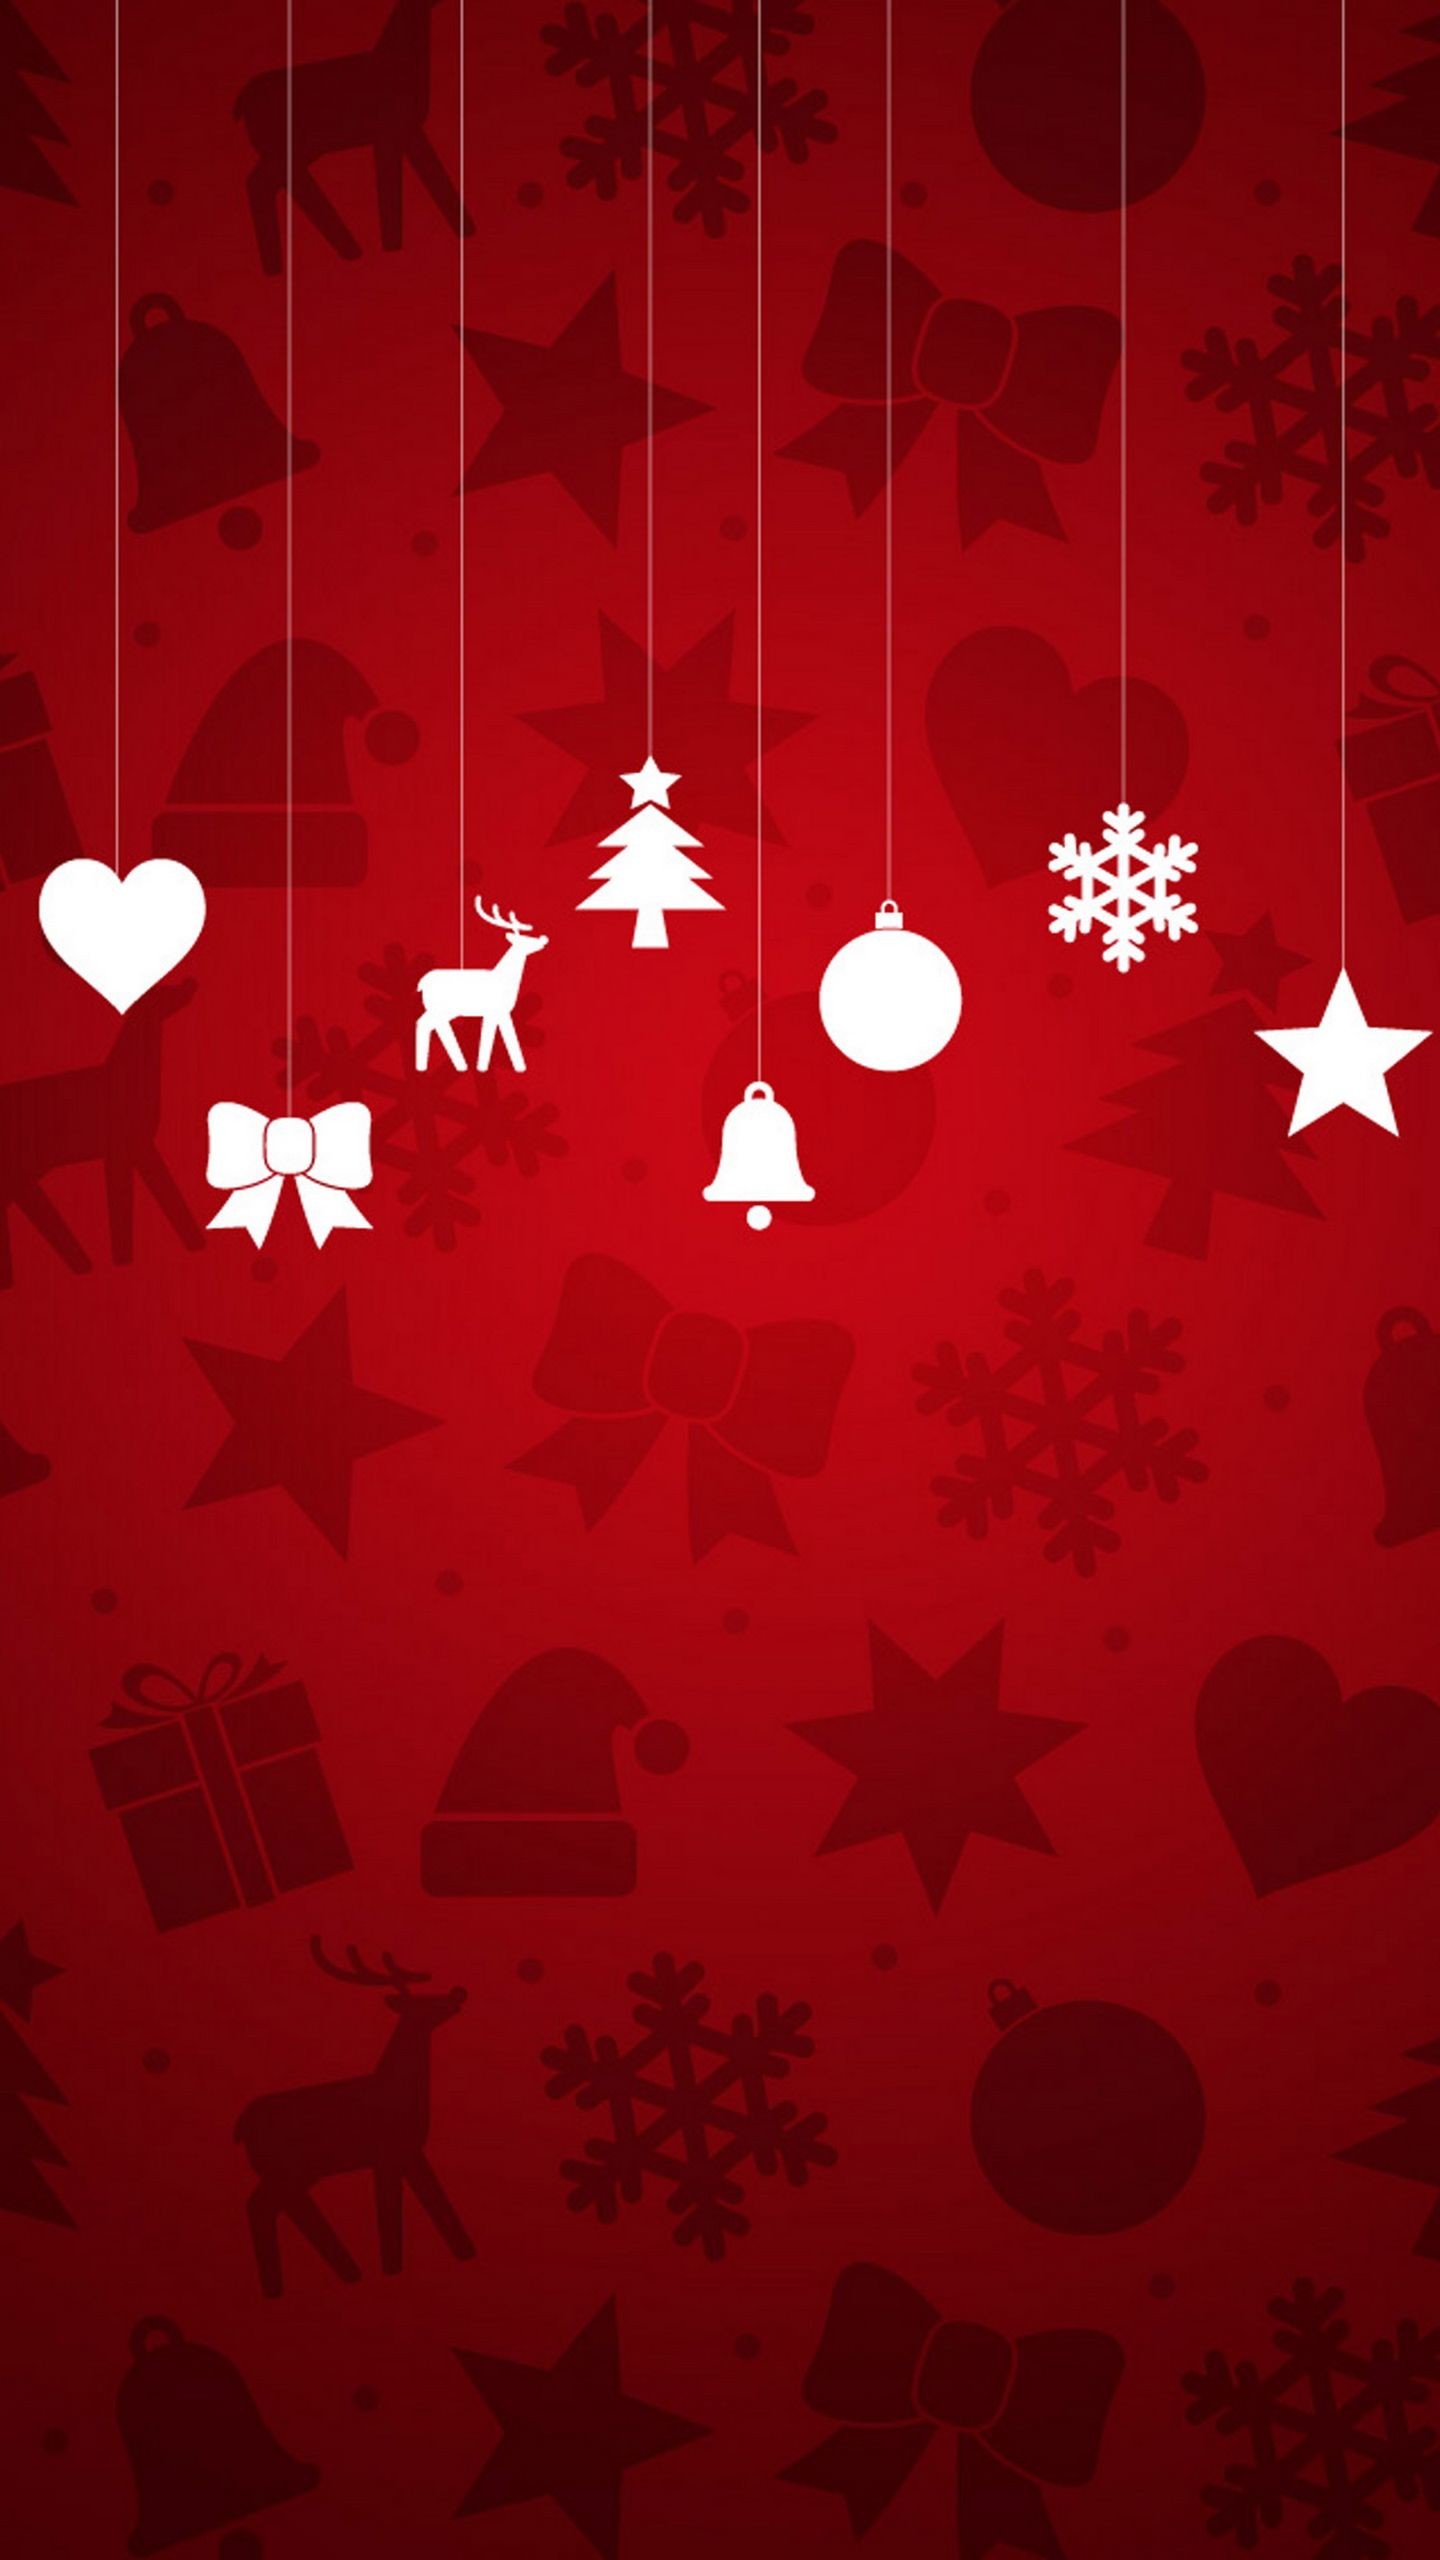 1440x2560 Samsung Galaxy Wallpaper Christmas | Minimal Christmas Ornaments Red  Background Galaxy Note 4 Wallpaper .